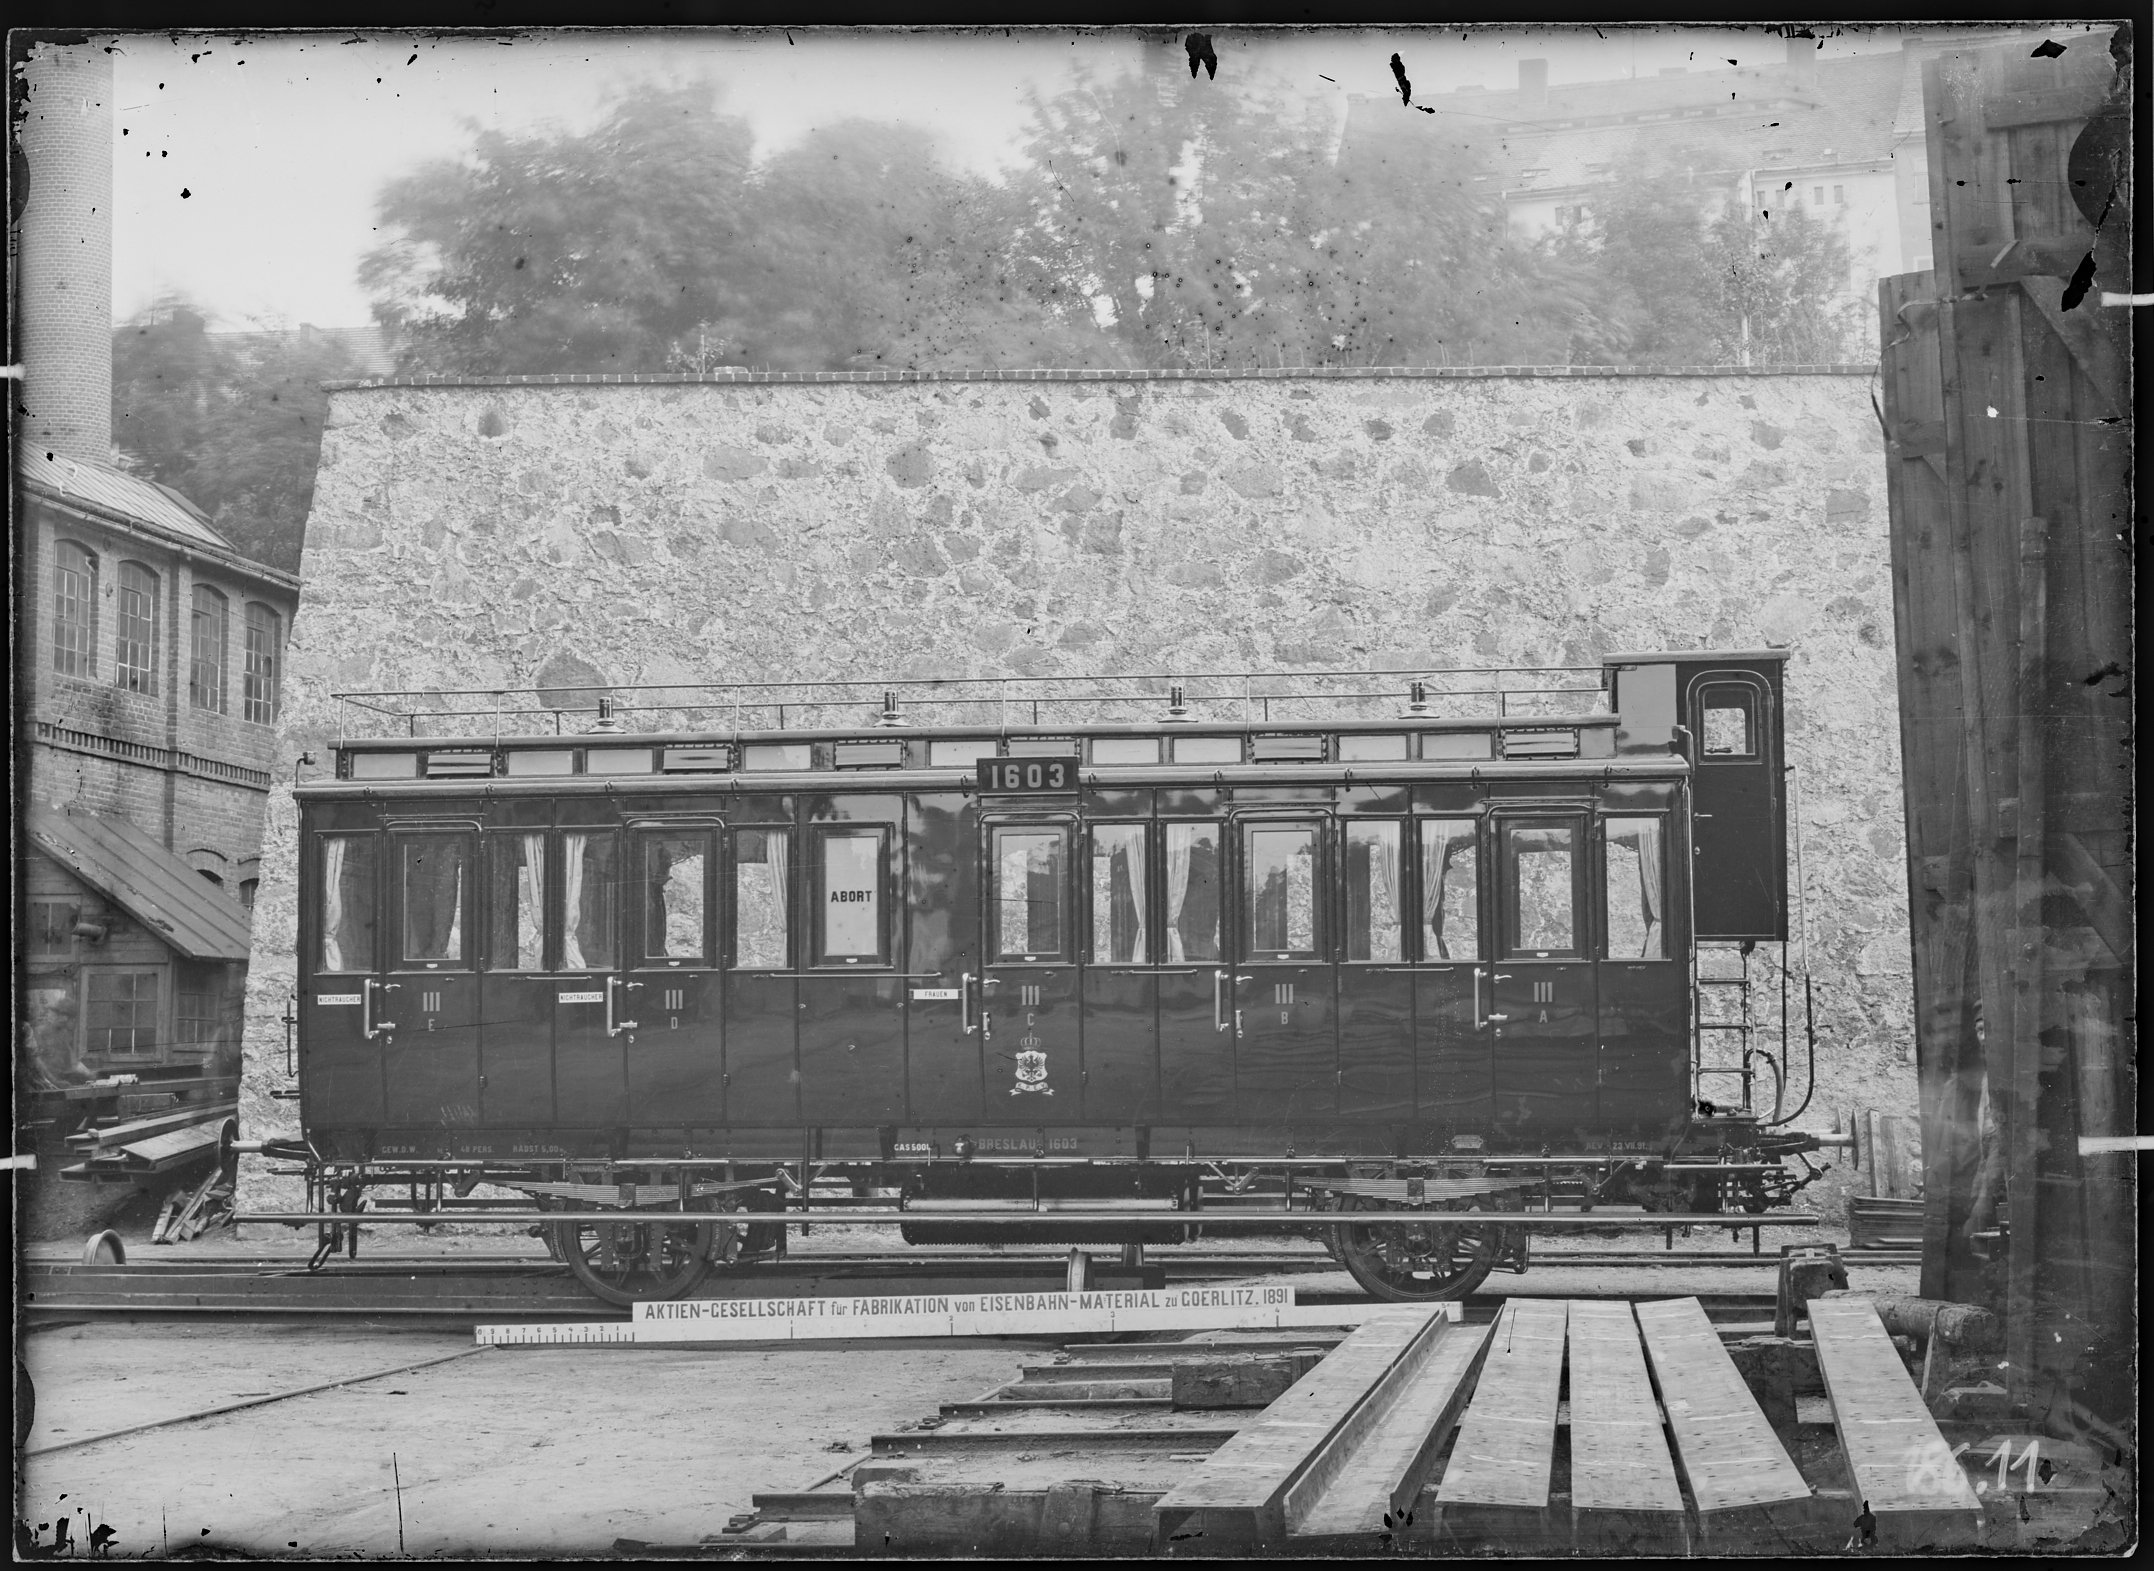 Fotografie: zweiachsiger Abteilwagen dritter Klasse (Längsansicht), 1891. Königlich Preußische Eisenbahn-Verwaltung (K.P.E.V.)? (Verkehrsmuseum Dresden CC BY-NC-SA)